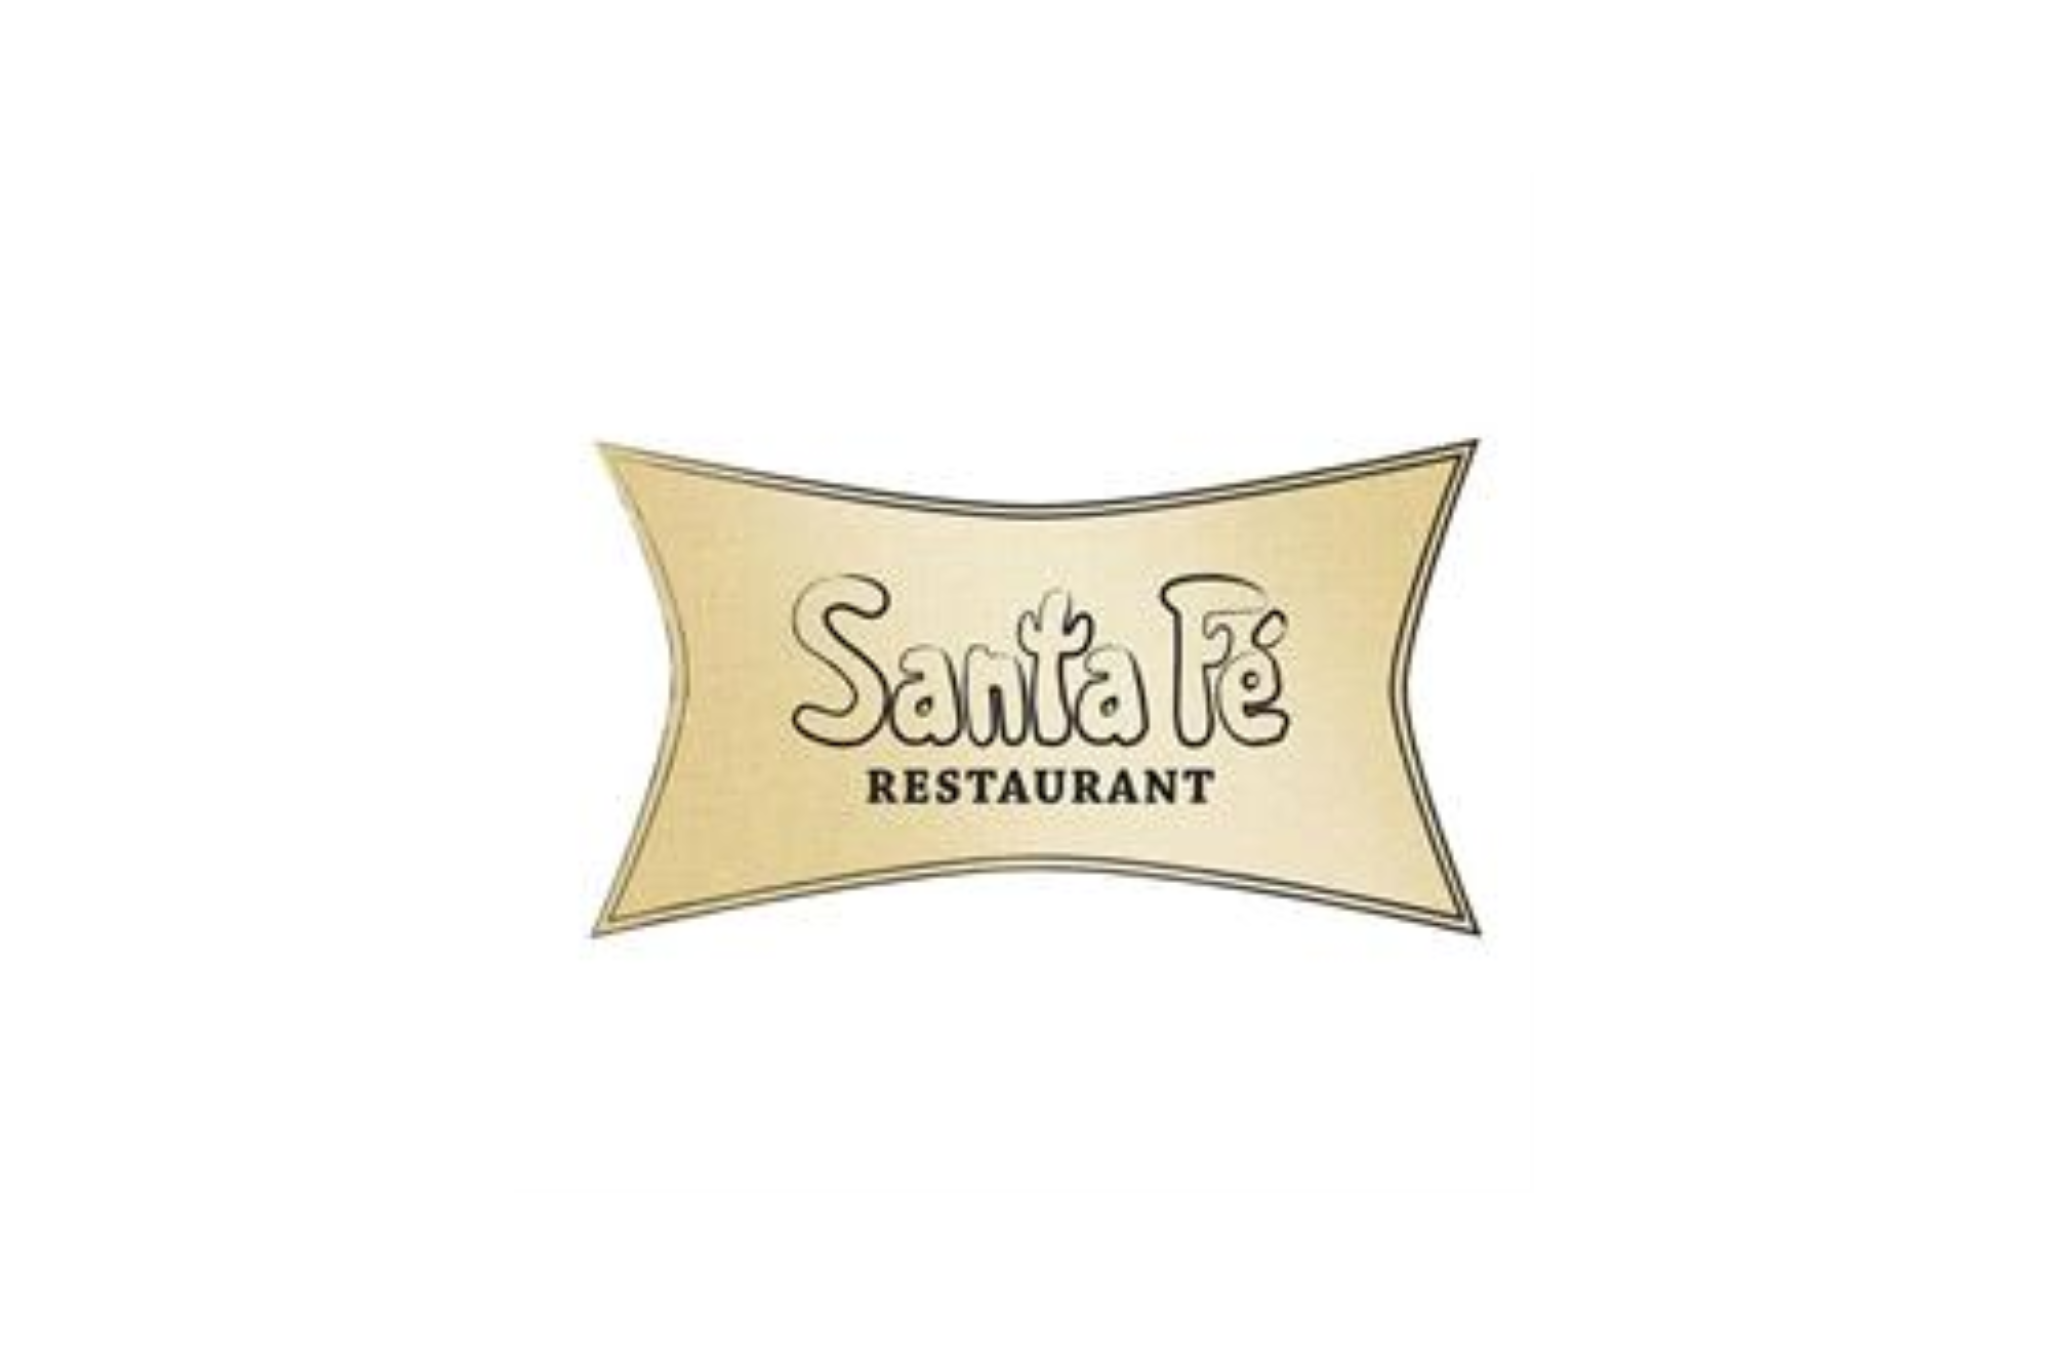 Ravintola Santa Fén logo